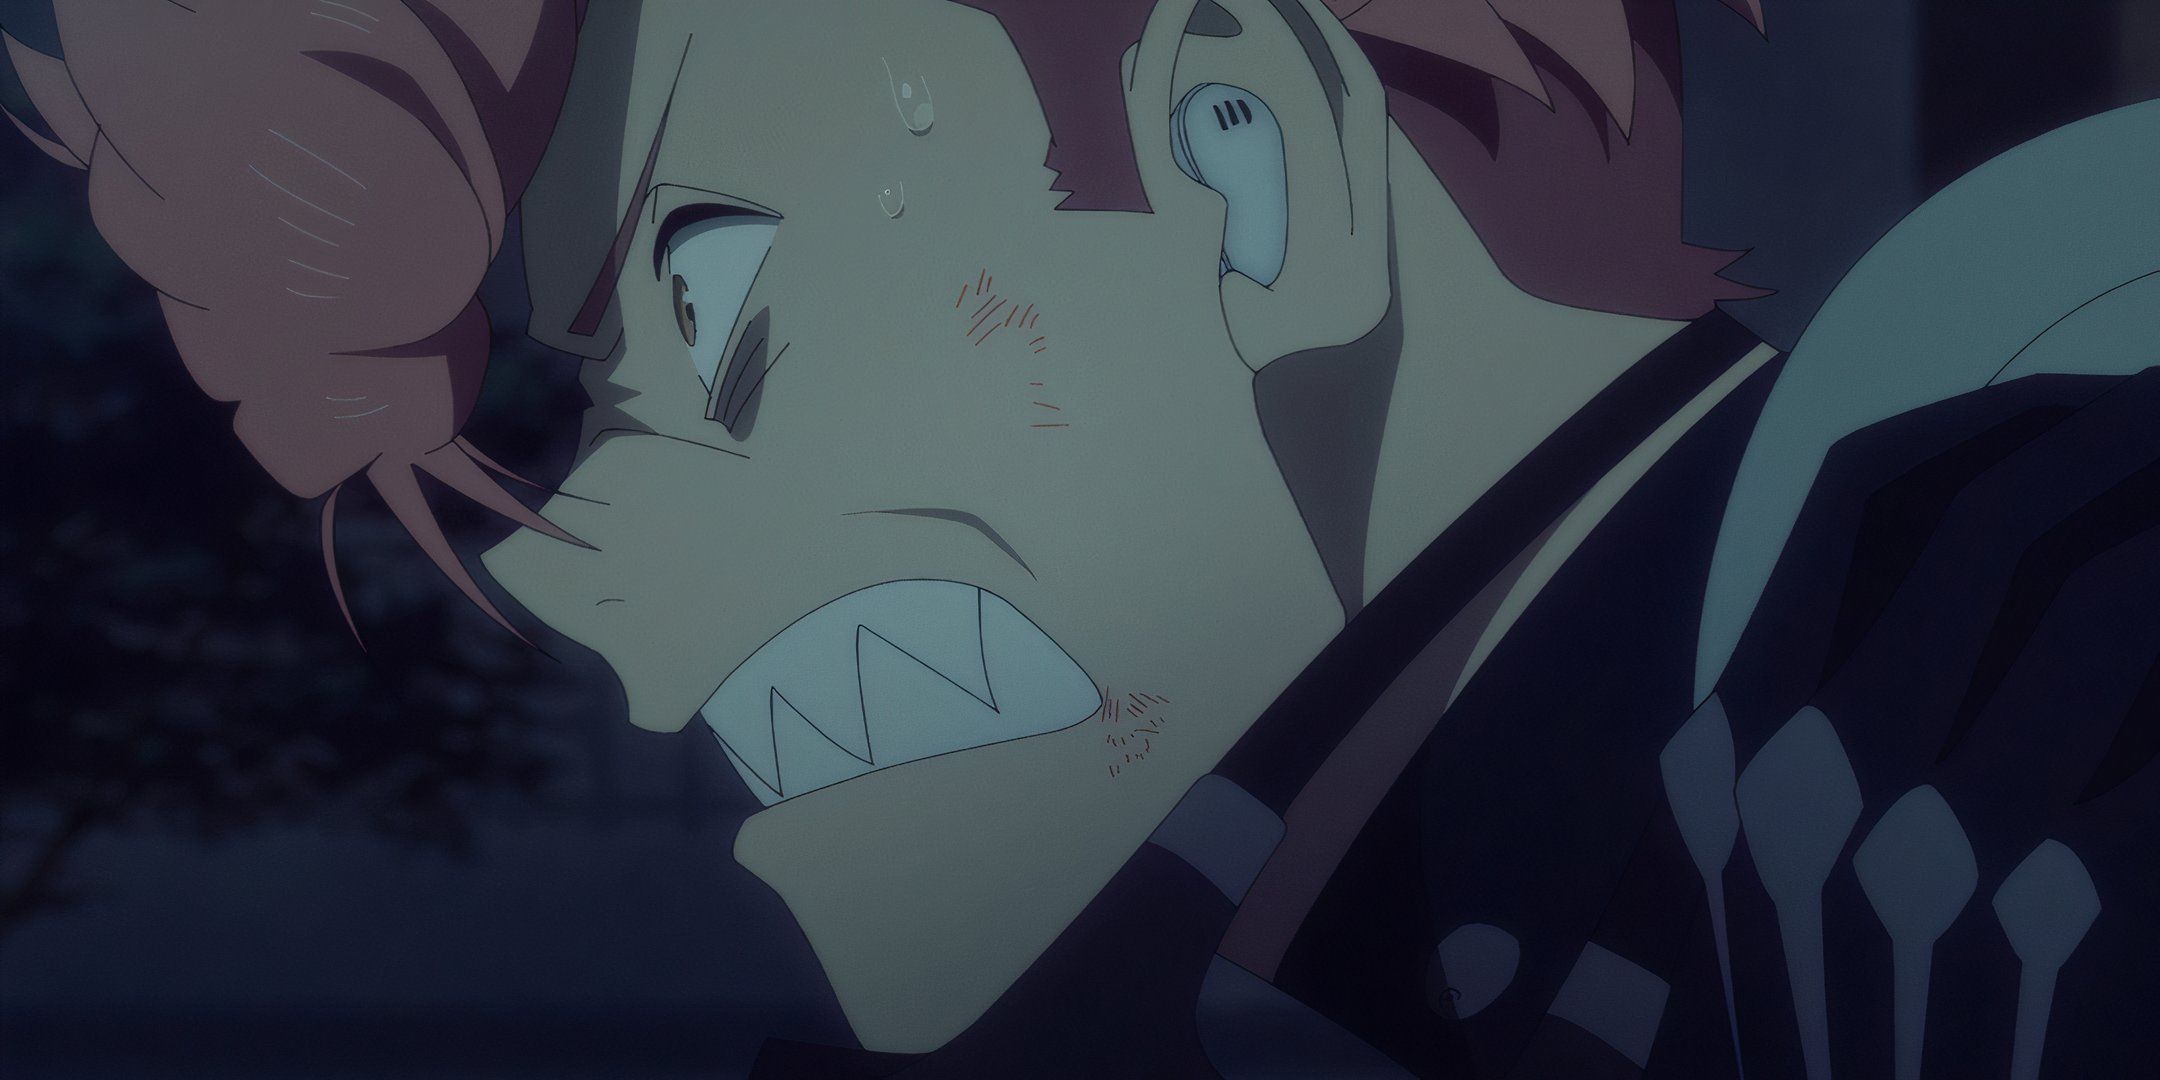 Kaiju No 8 Episode 7 Iharu gritting his teeth while in battle.